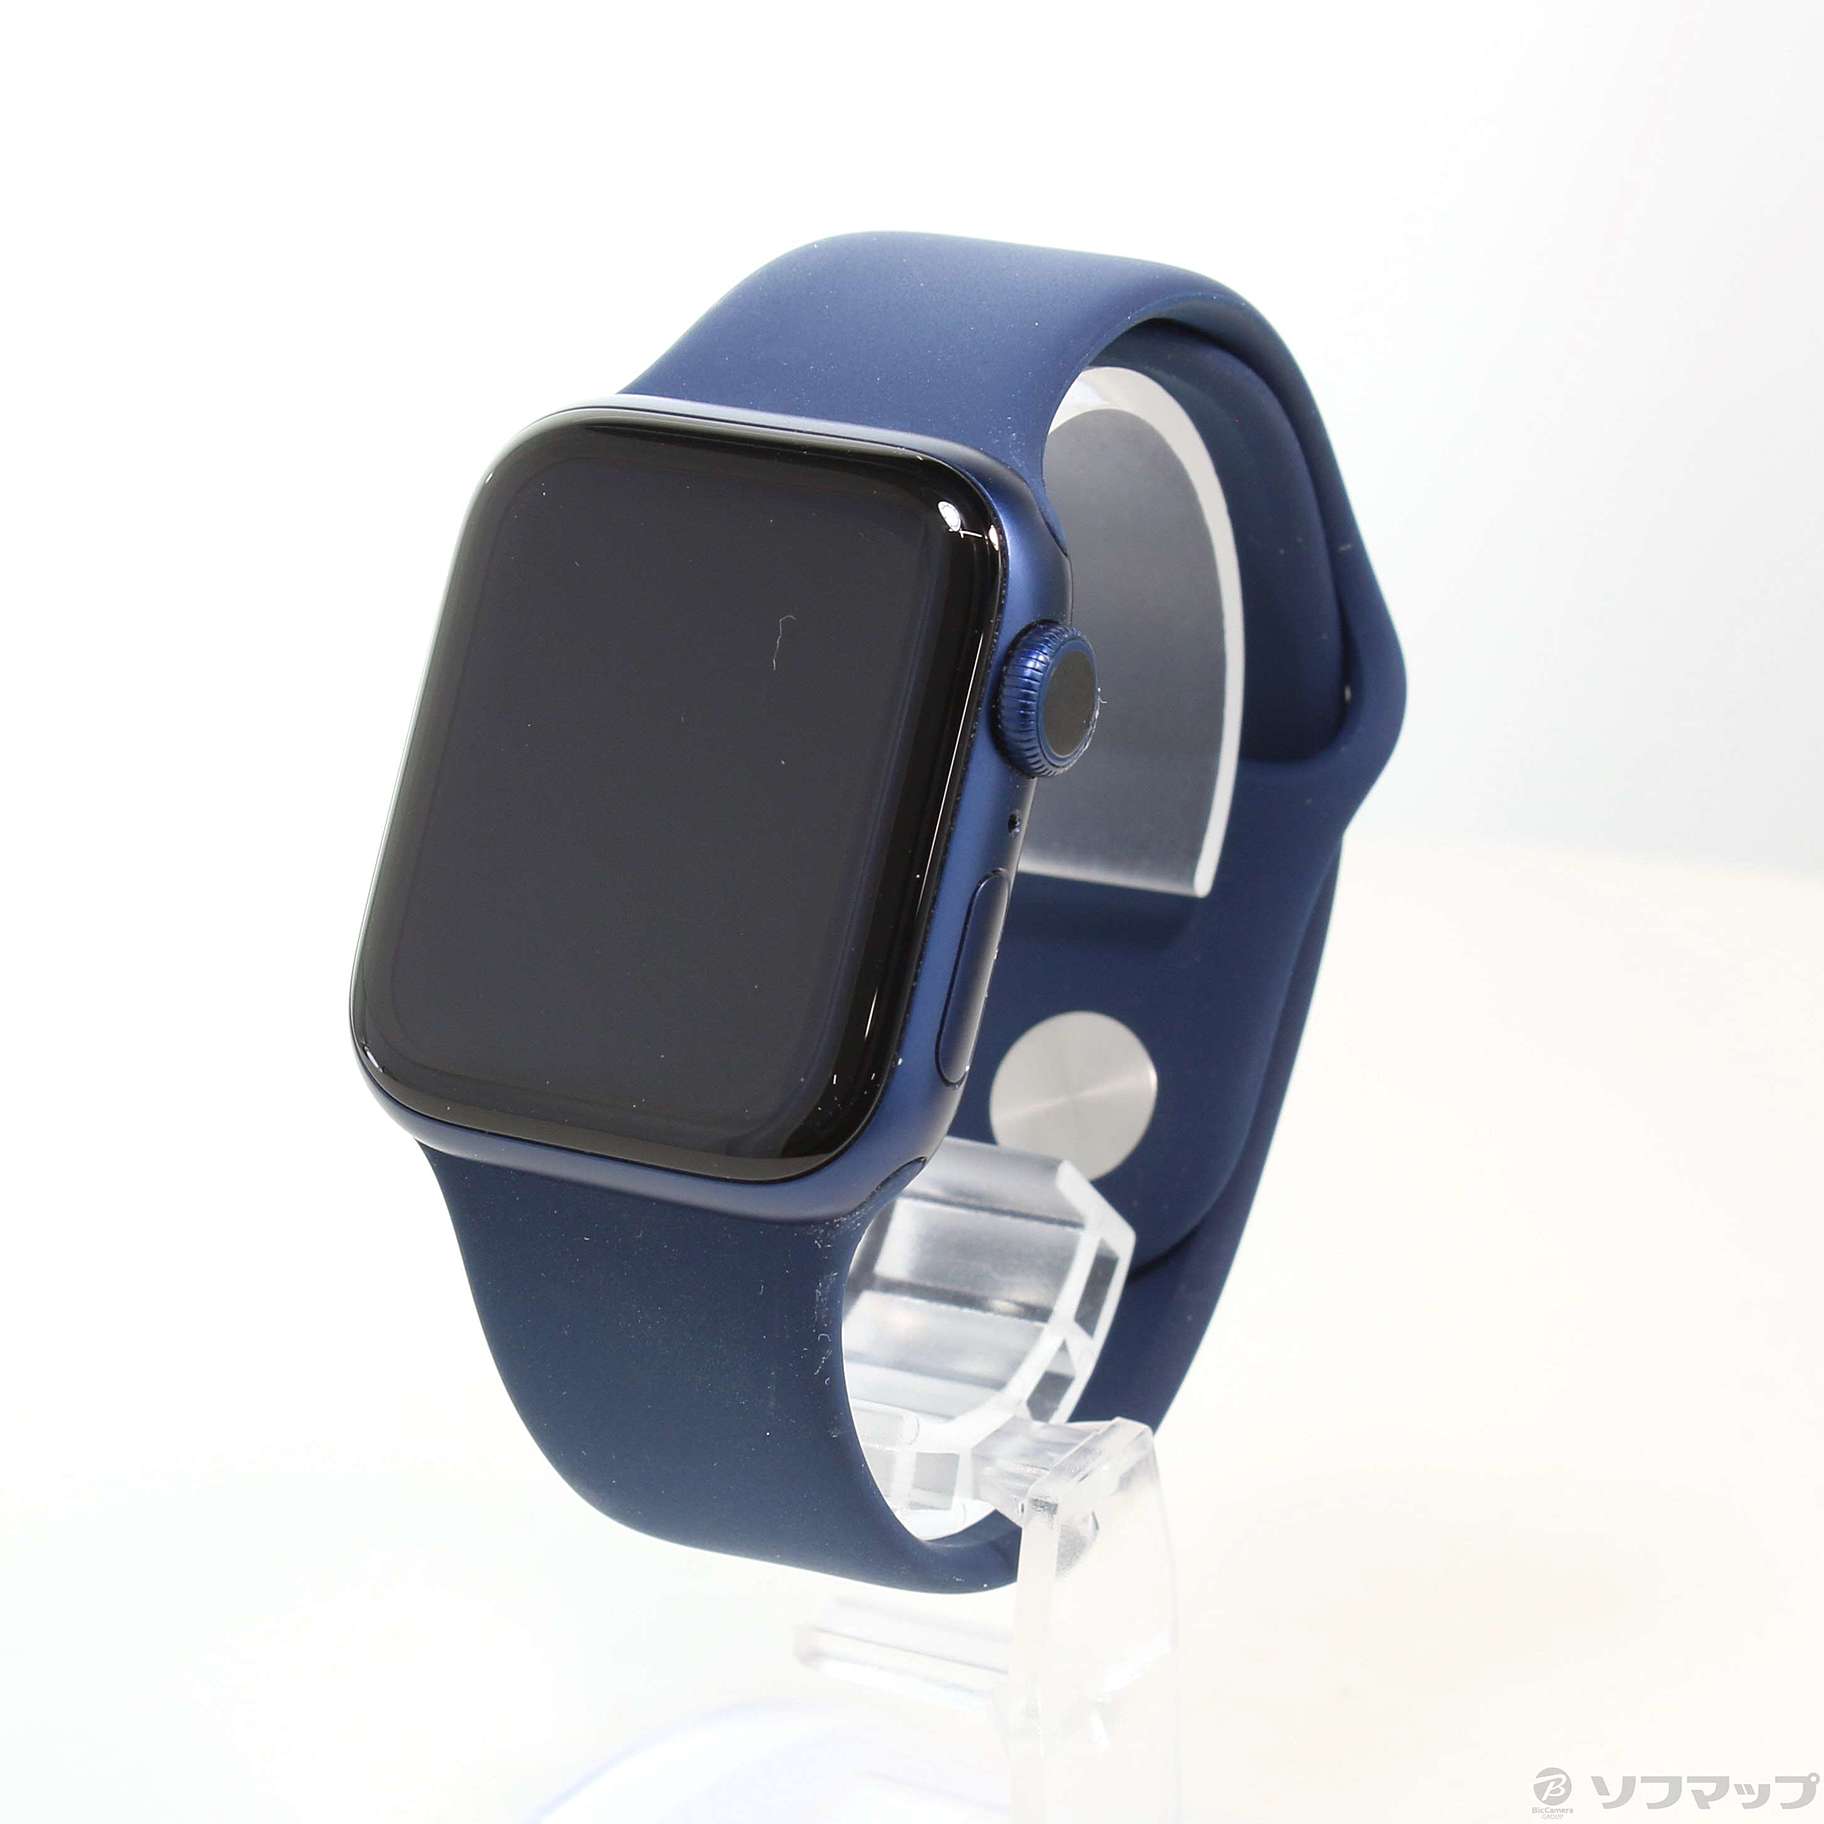 Applewatch series6 ブルー 40mm GPS